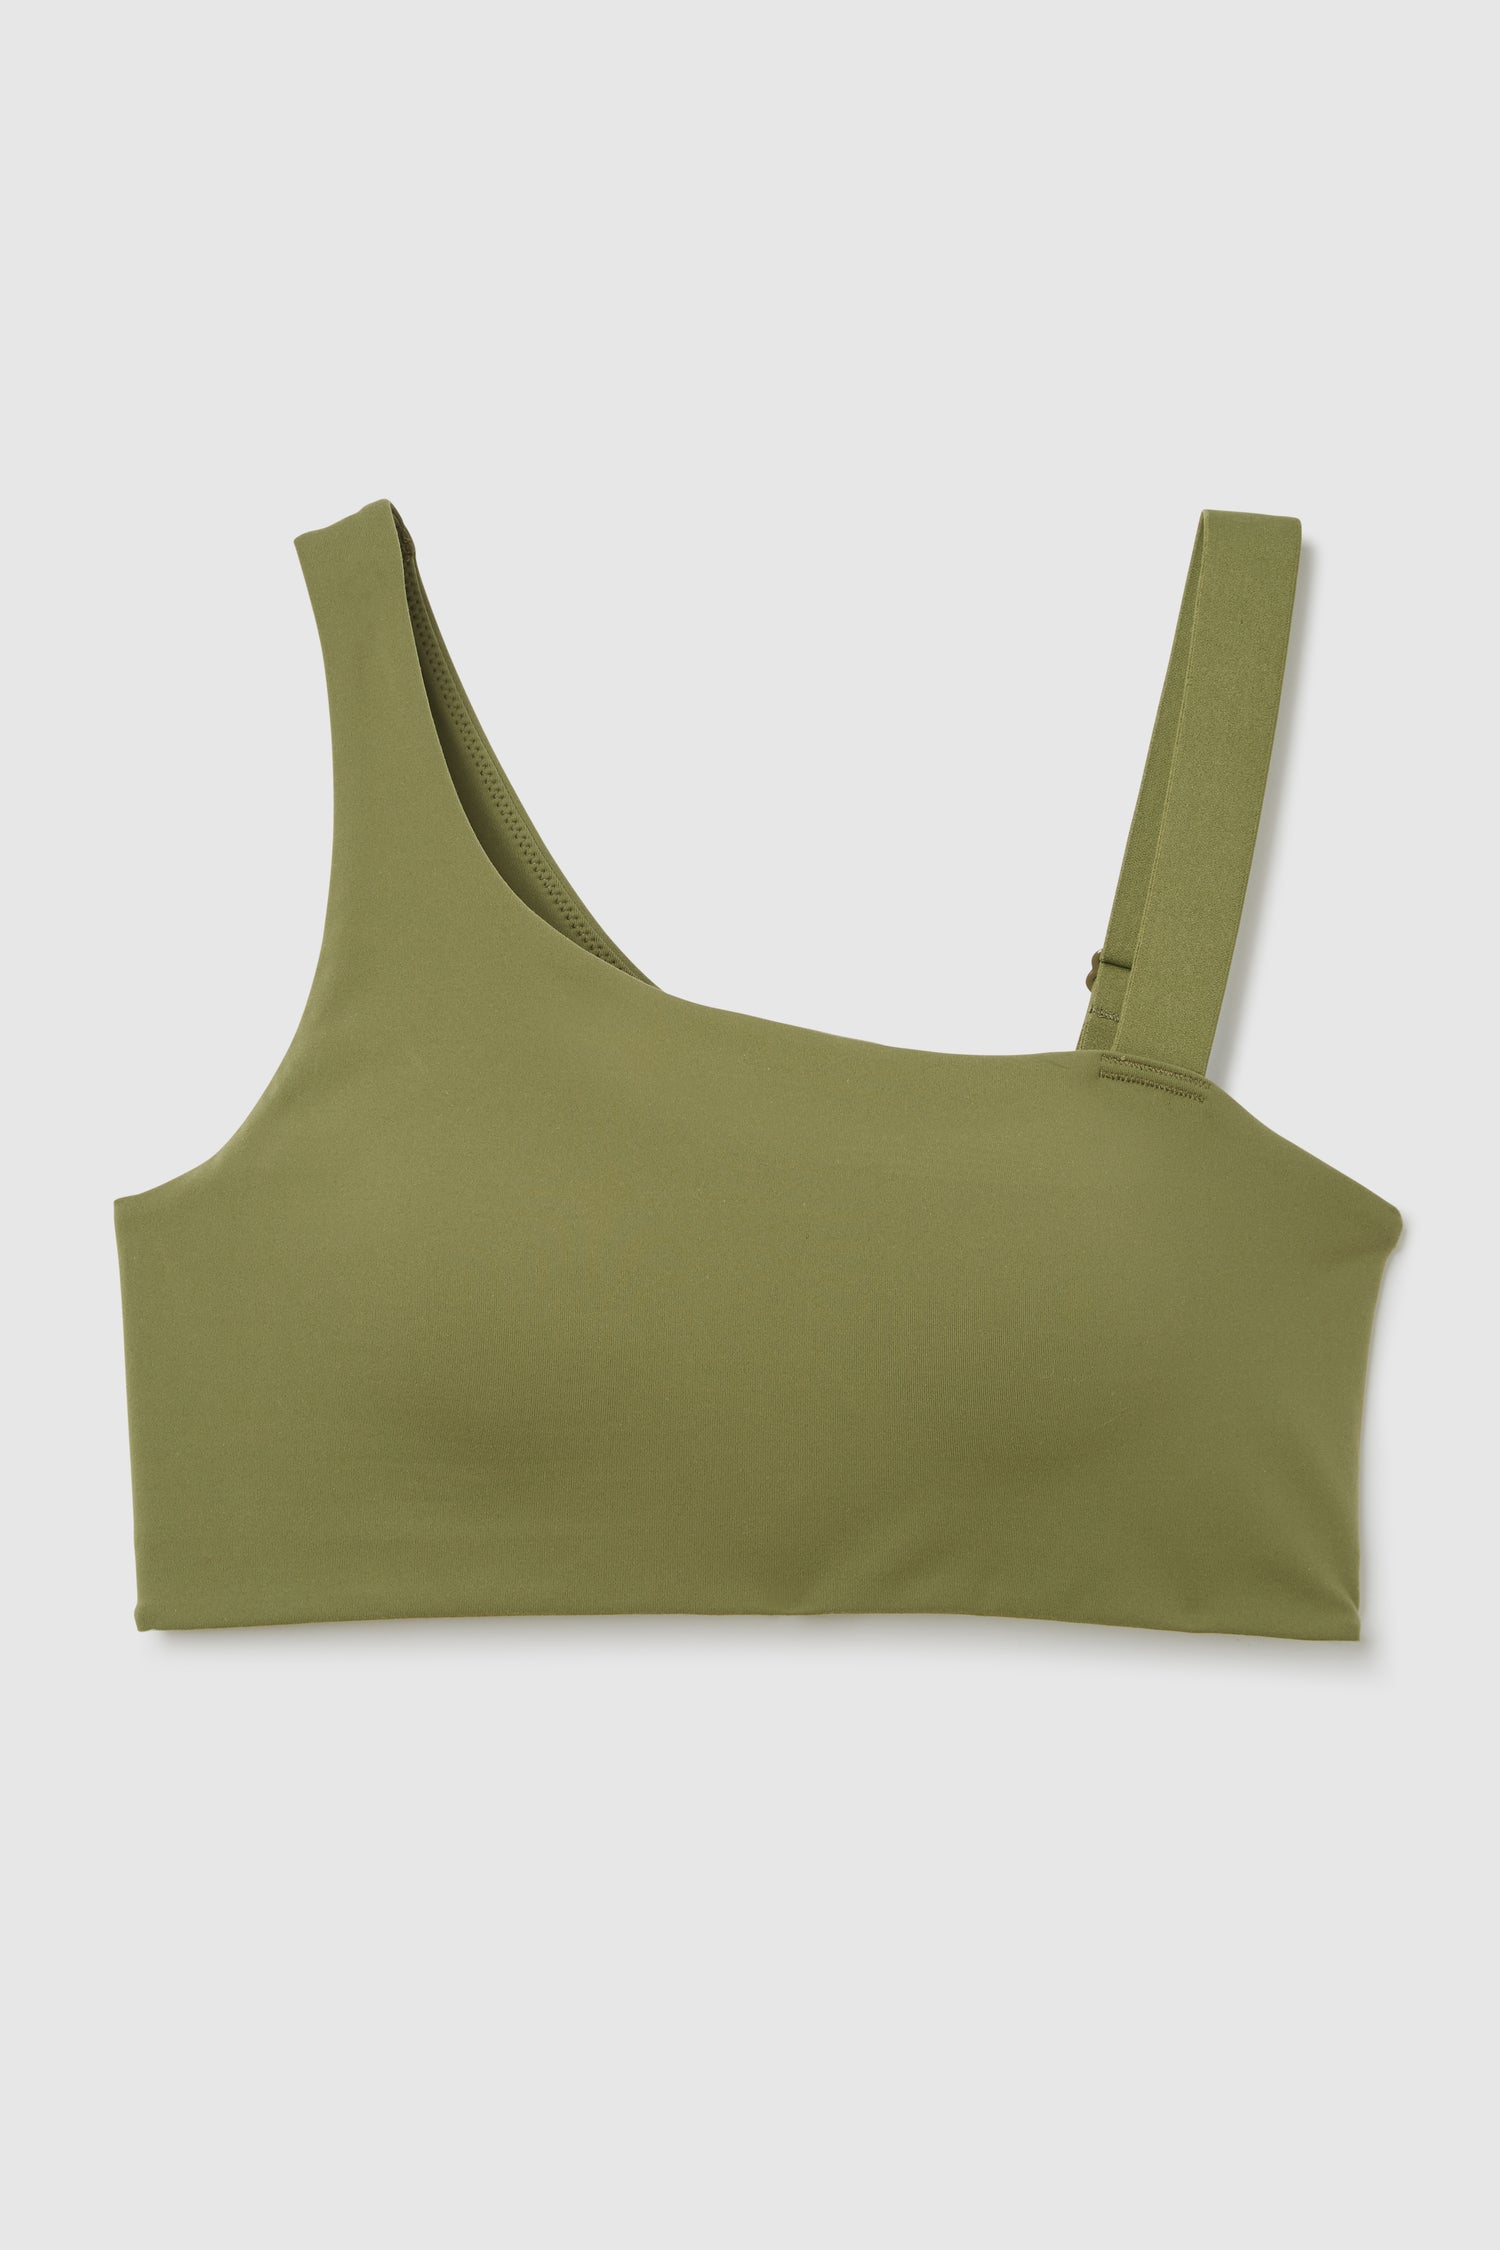 Cutout Women Sports Bra Push Up High Neck Tank Sleeveless Crop